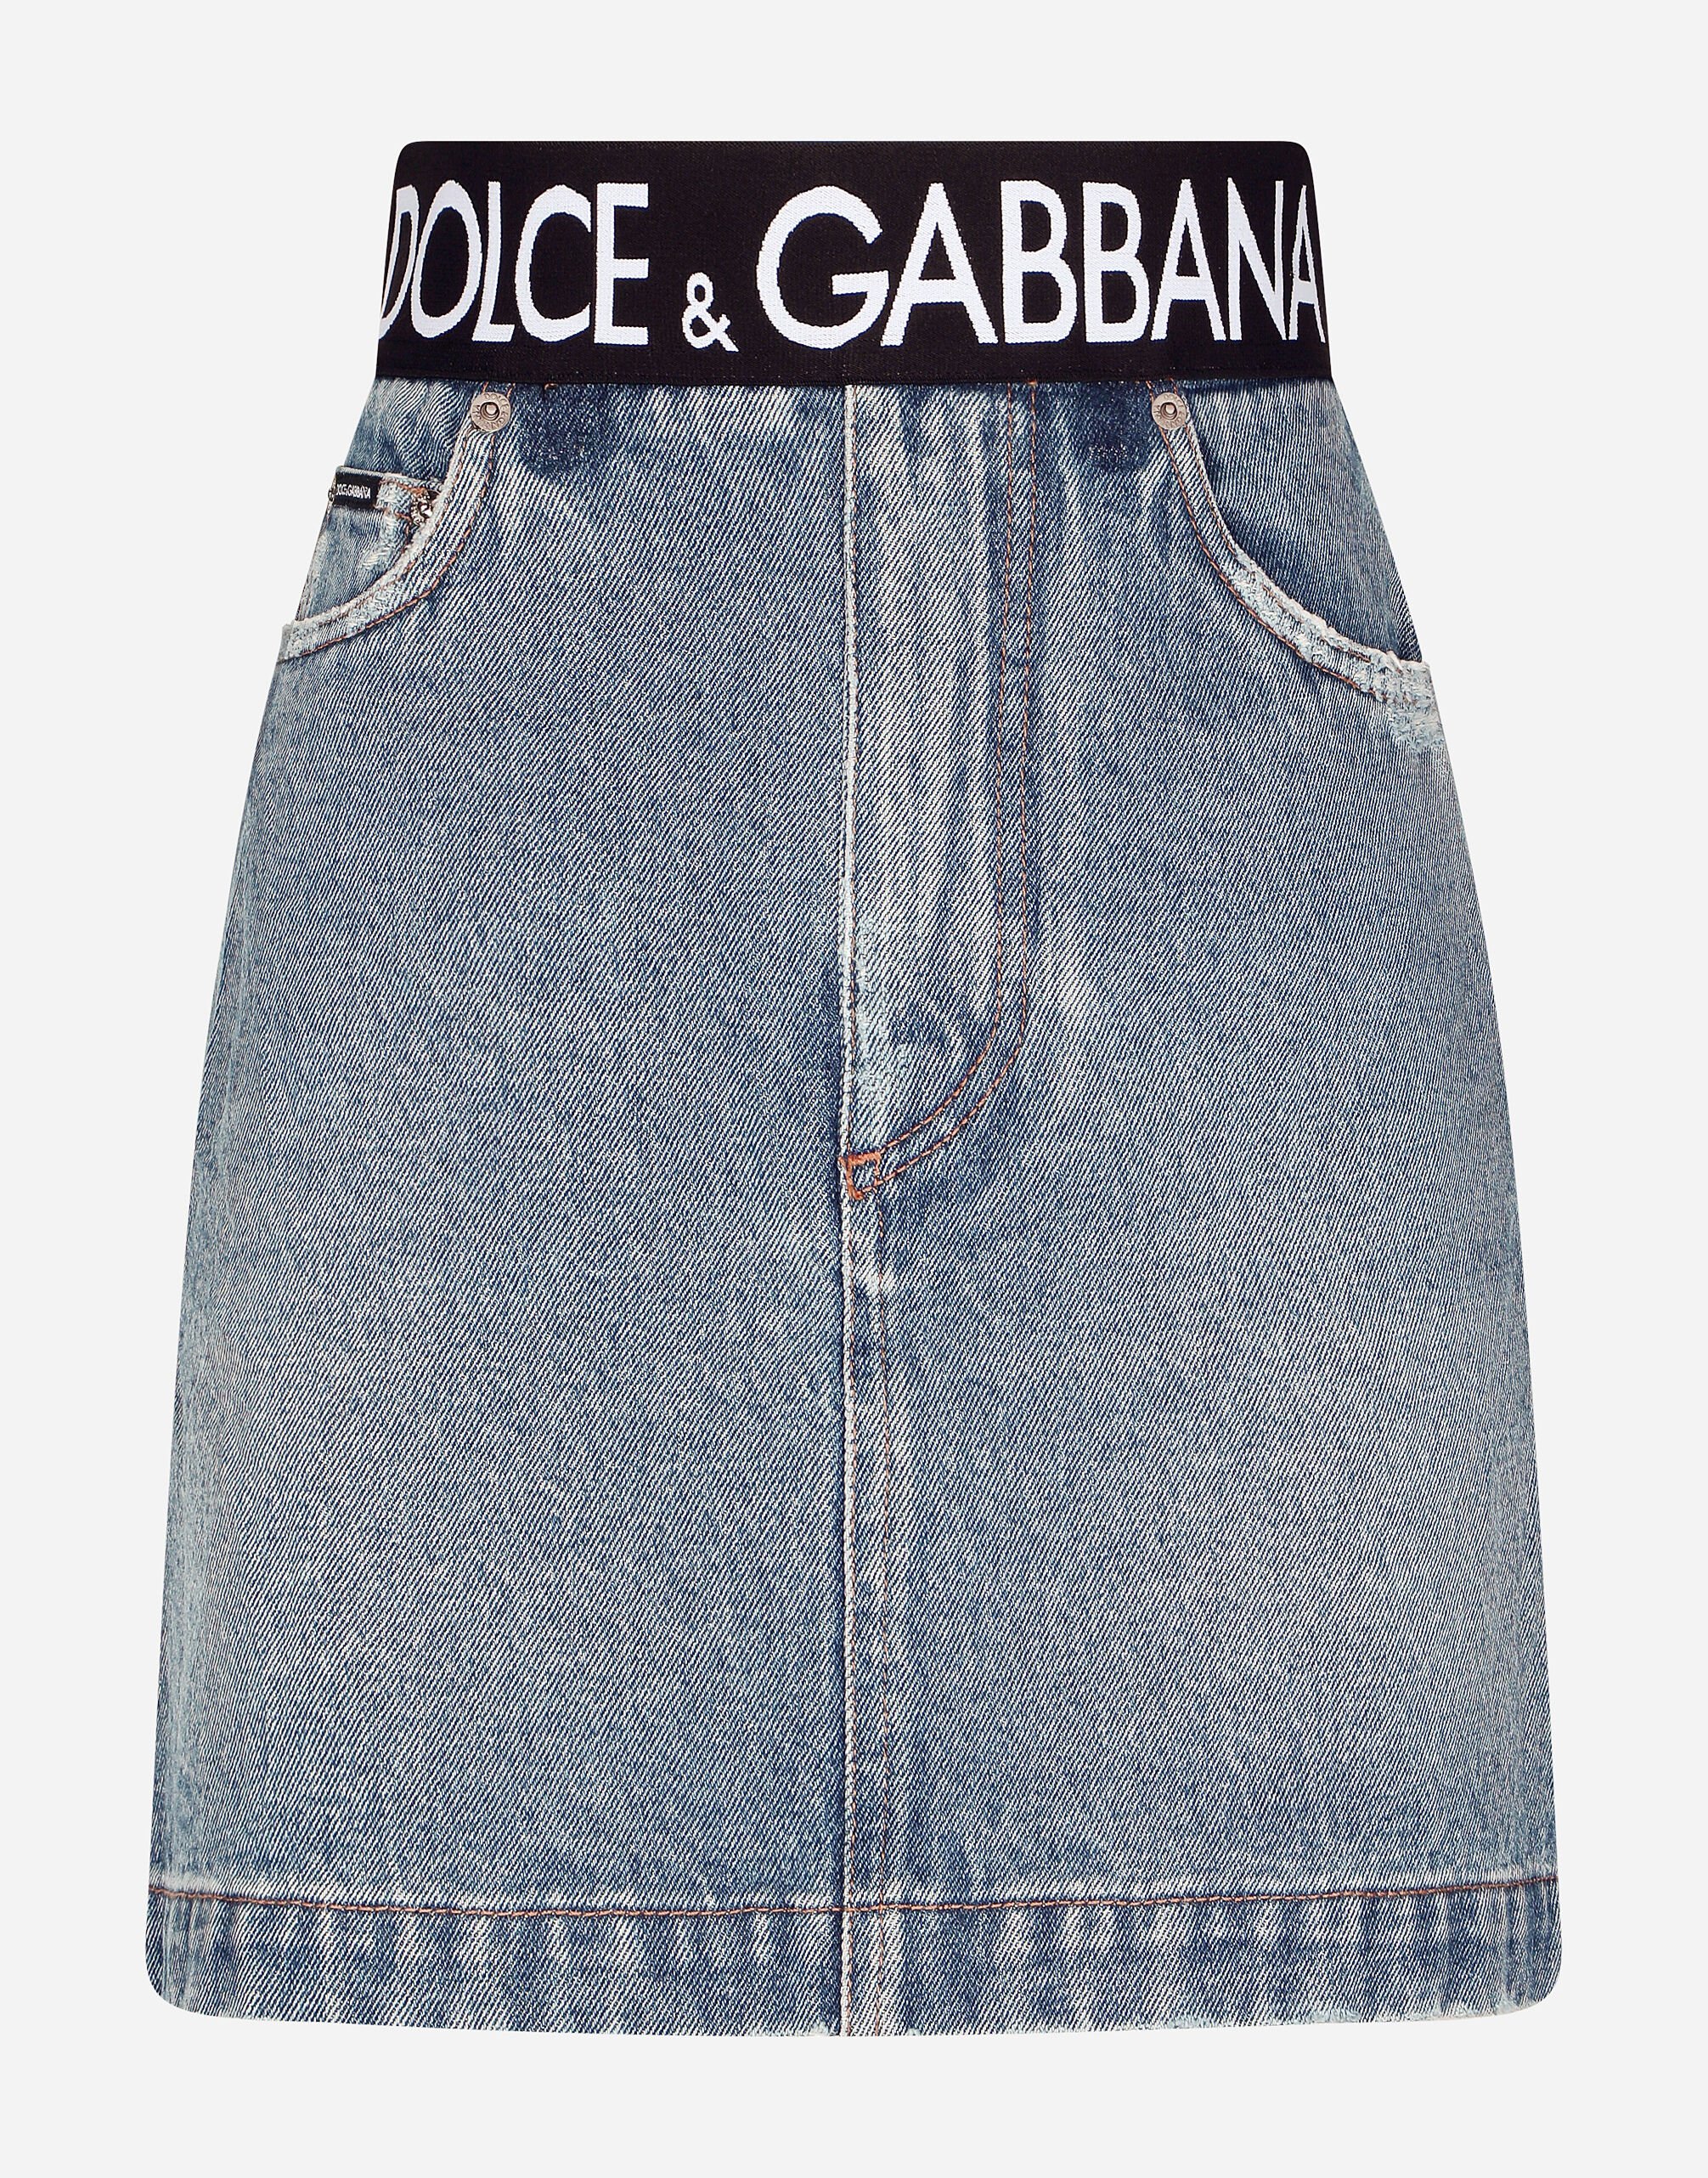 Dolce & Gabbana Short denim skirt with branded waistband Animal Print FTBWQTFSSEP